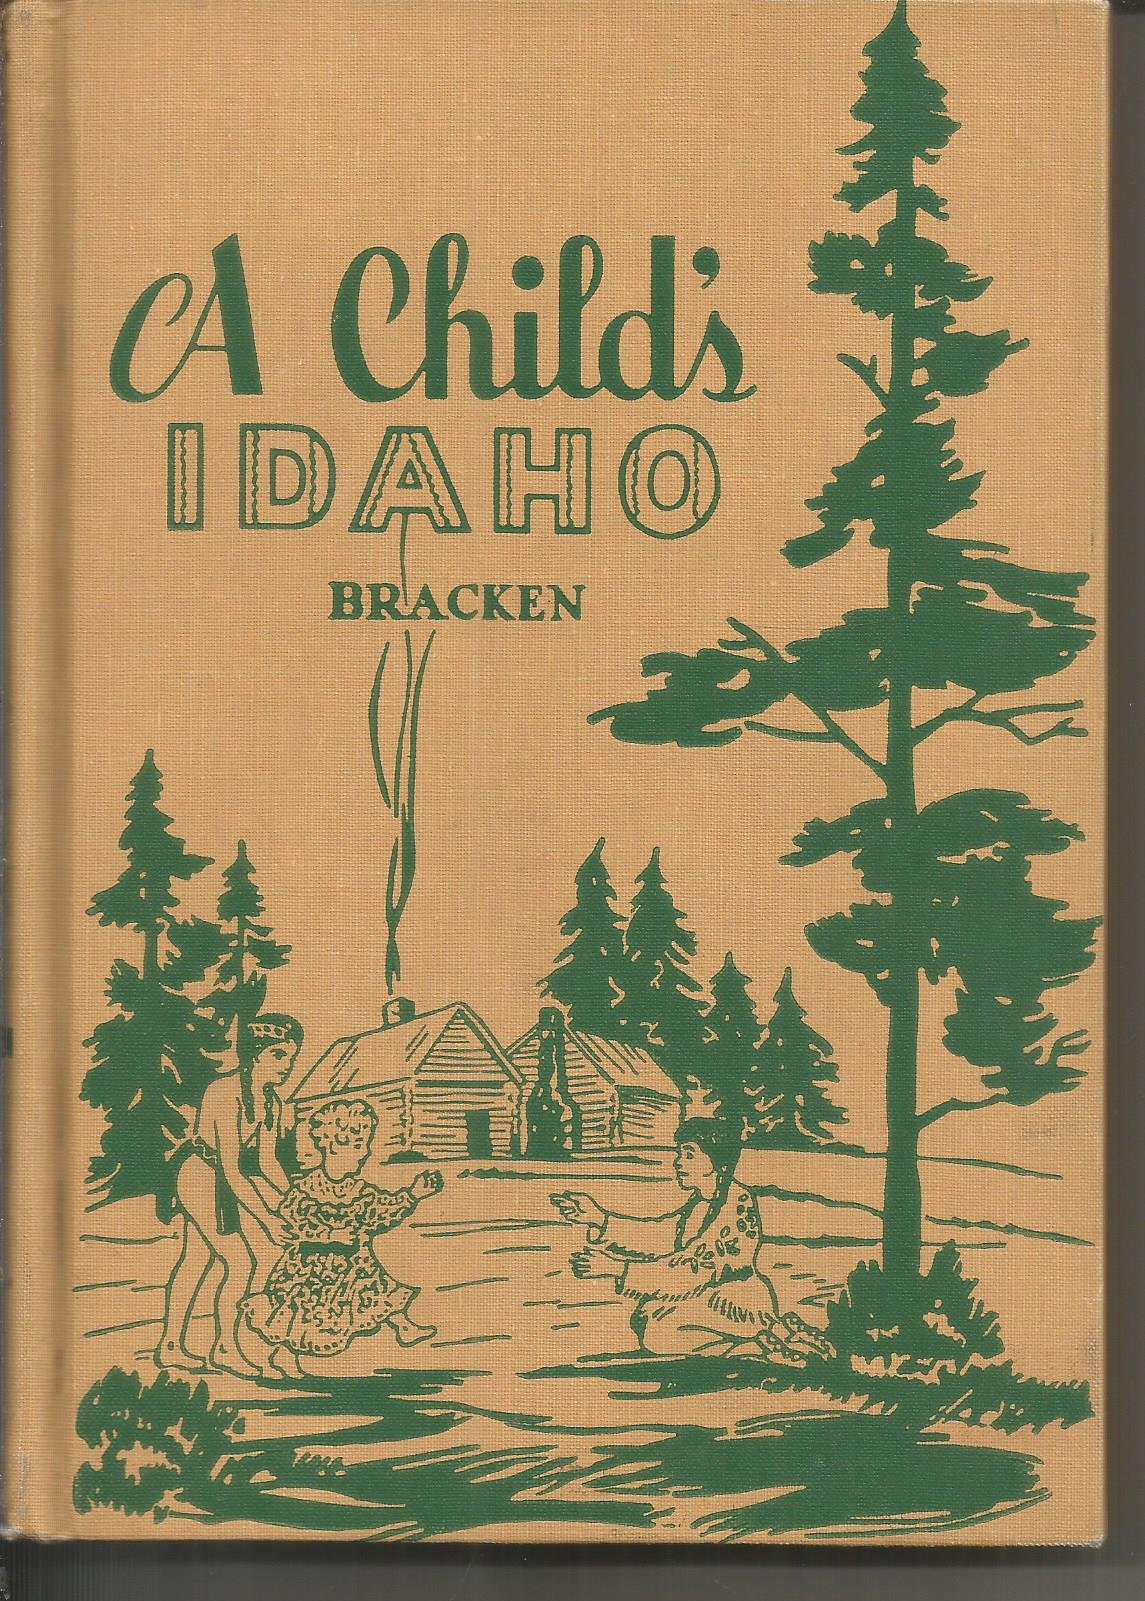 A child's Idaho (book cover)